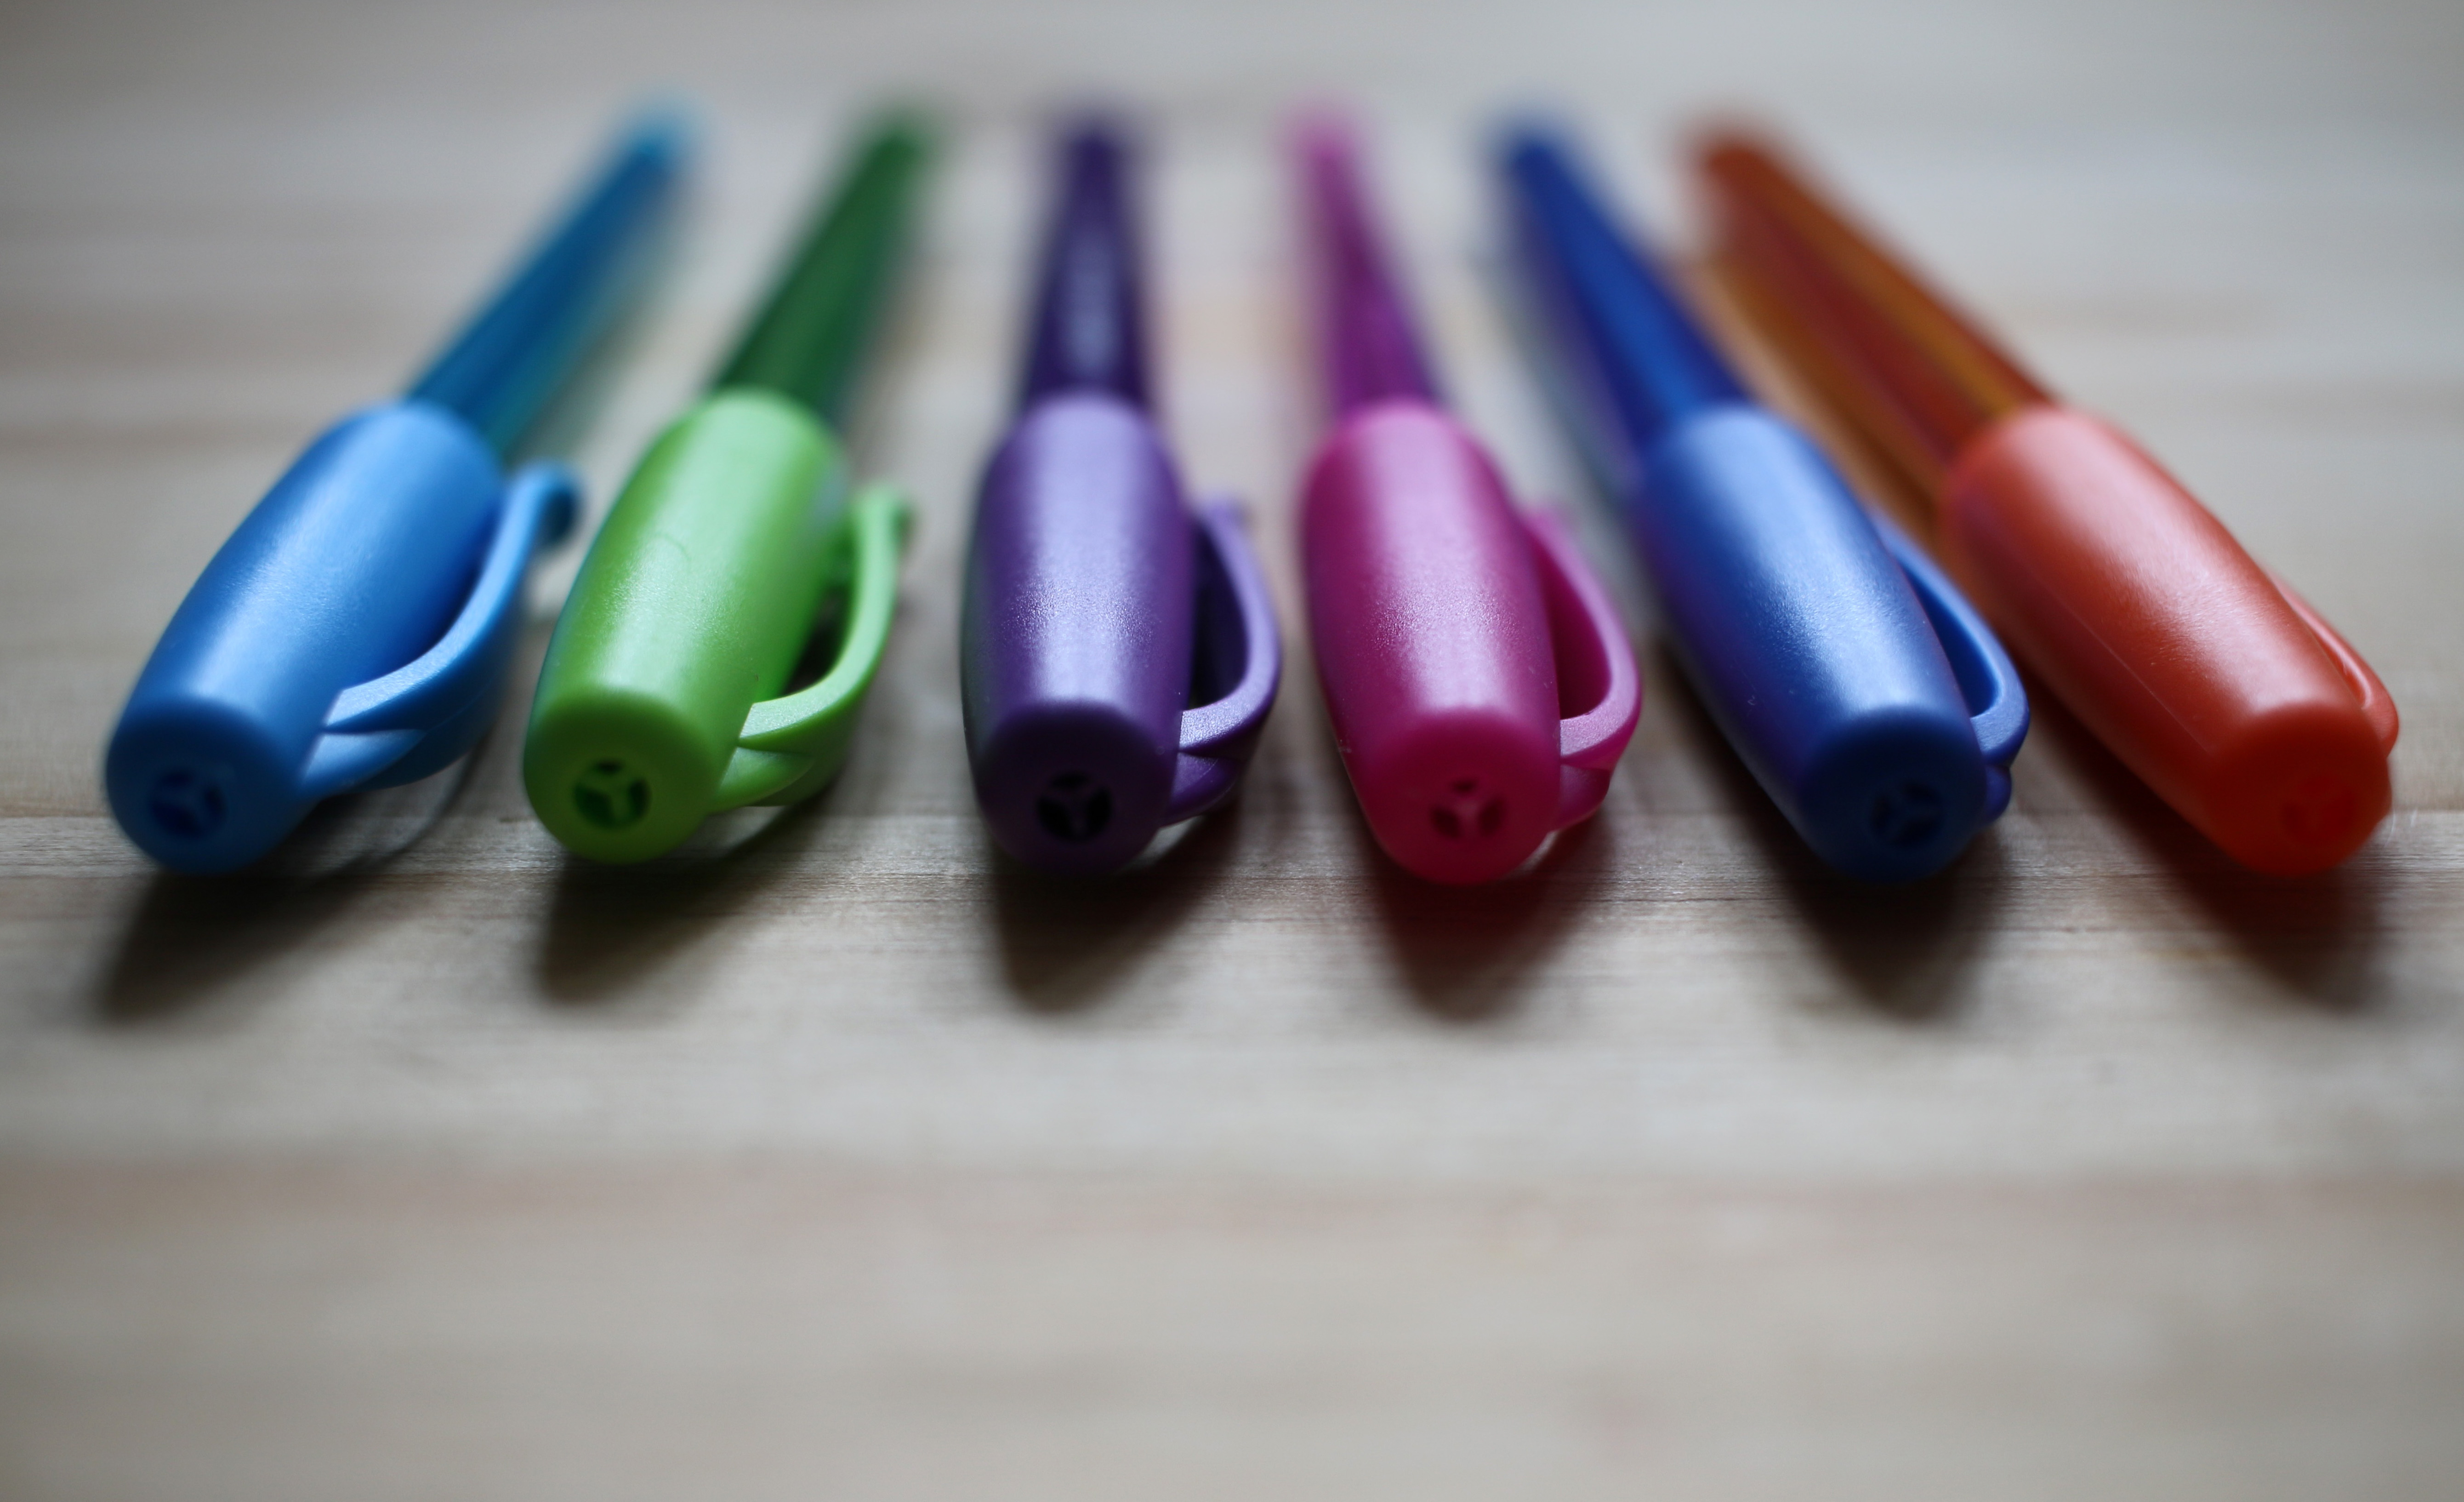 Multi colored pens image - Free stock photo - Public Domain photo - CC0  Images